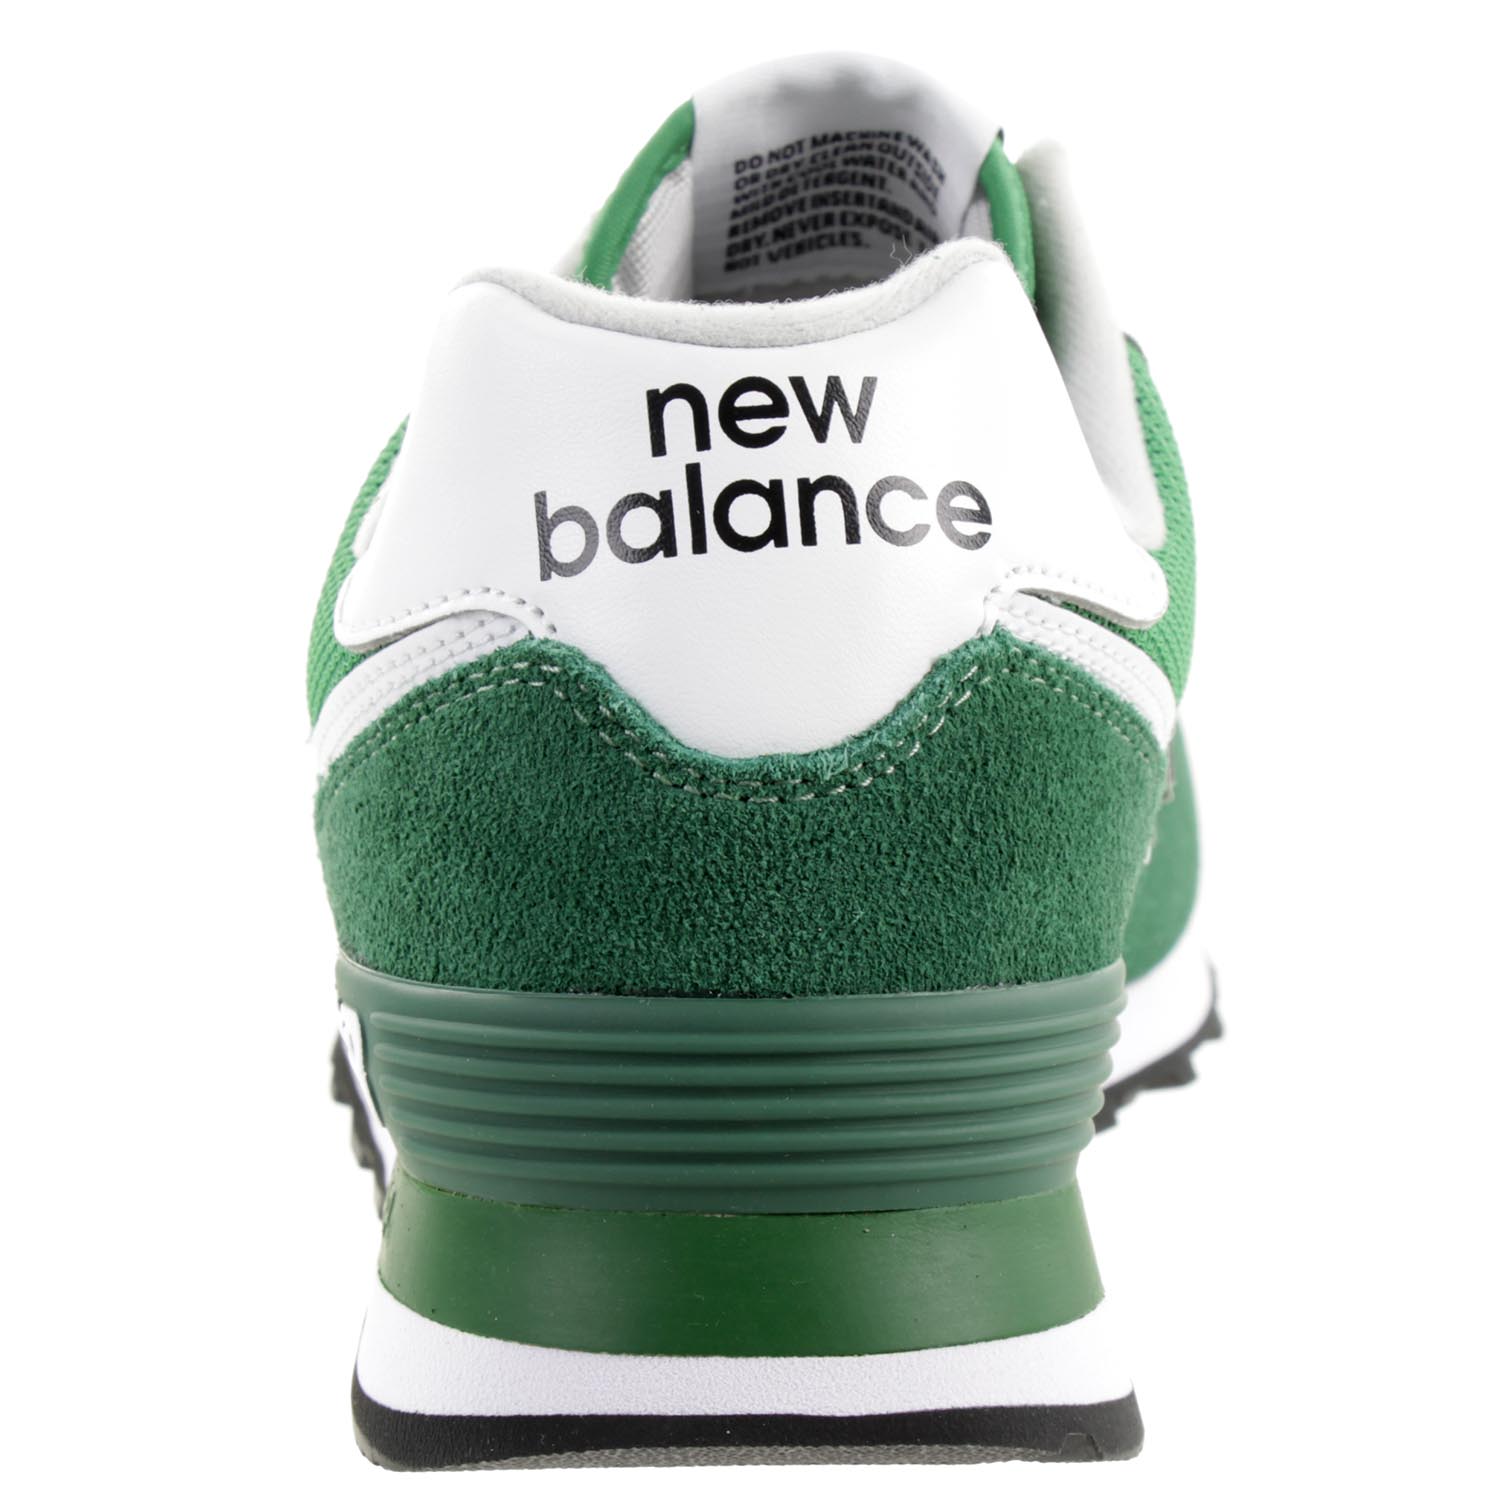 New Balance ML 574 SSP Classic Sneaker Herren Schuhe grün